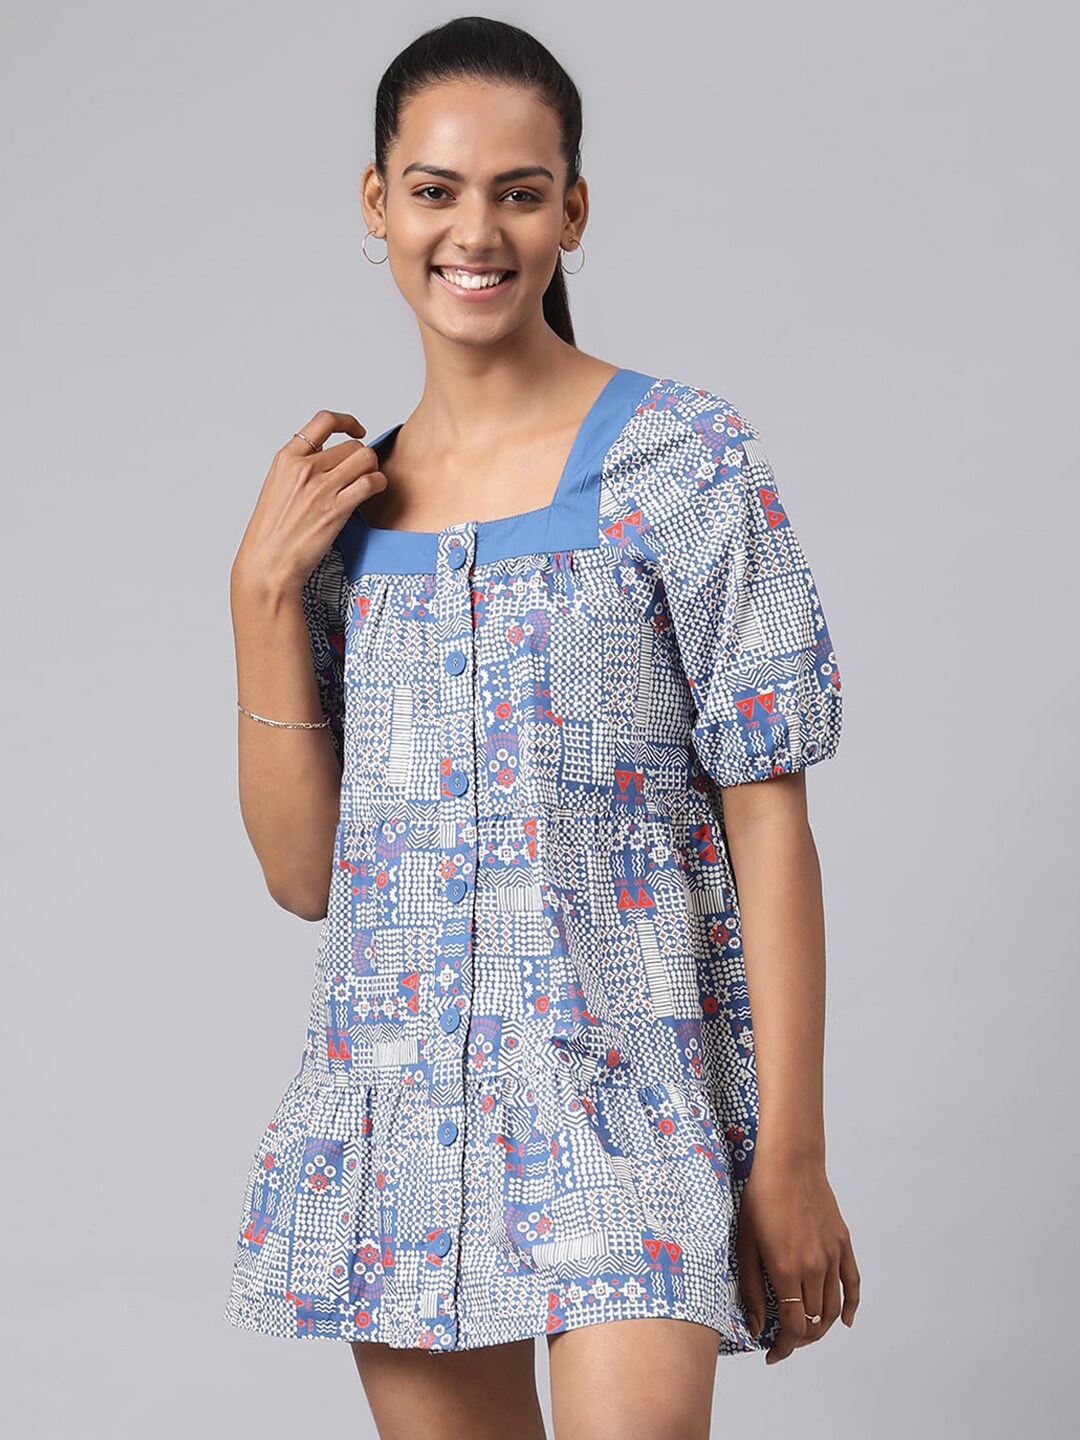 Fabindia Blue Floral A-Line Mini Dress Price in India